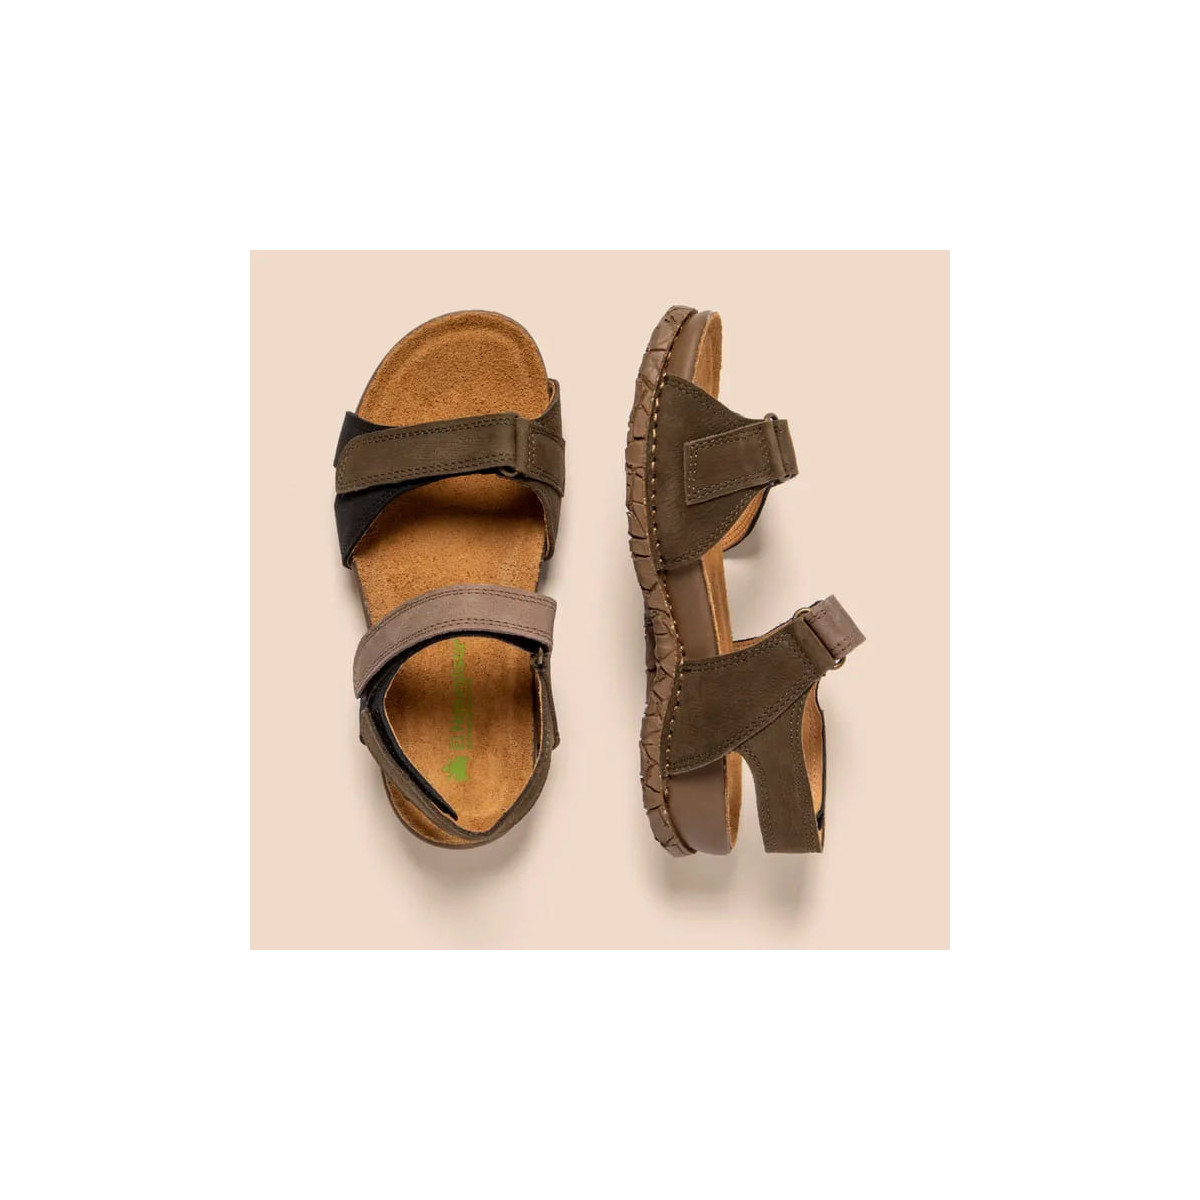 Sandales confortables plates en cuir à scratch et semelles ergonomiques - Marron - El naturalista